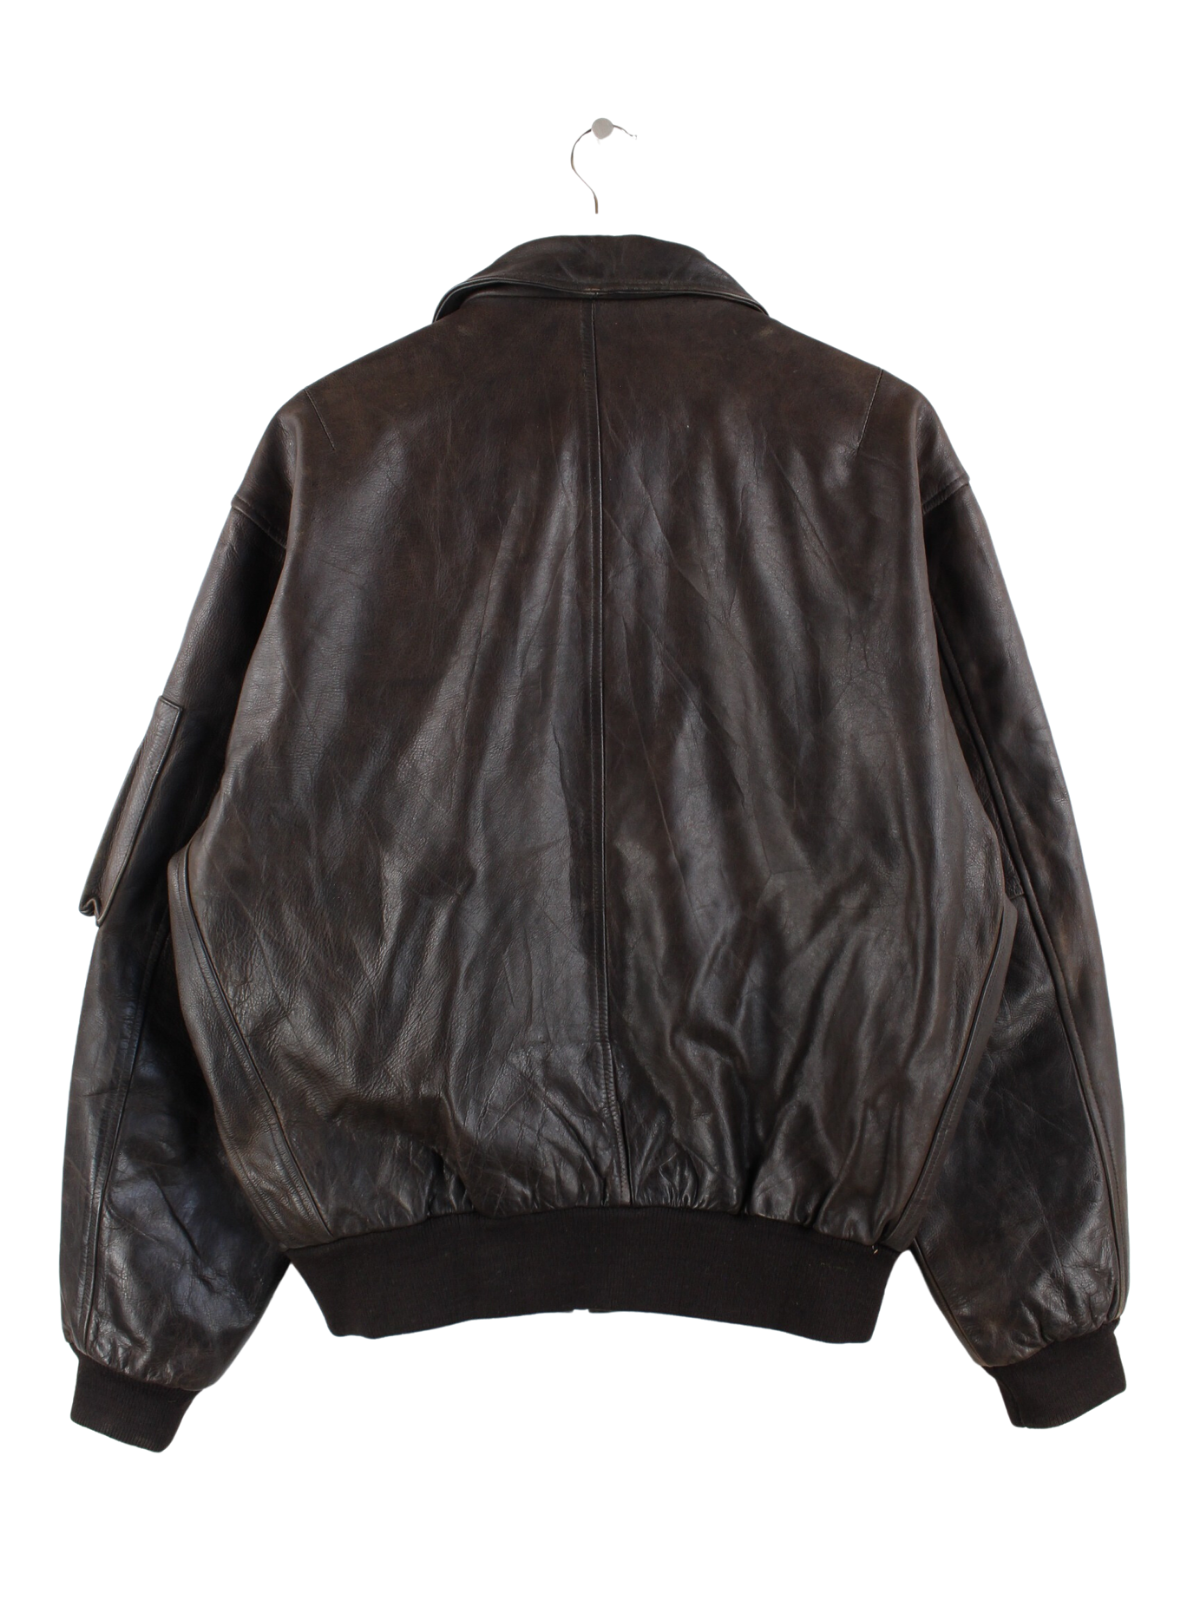 Vintage US Redskins RDS wingleather corp aviator leather jacket | Vinted